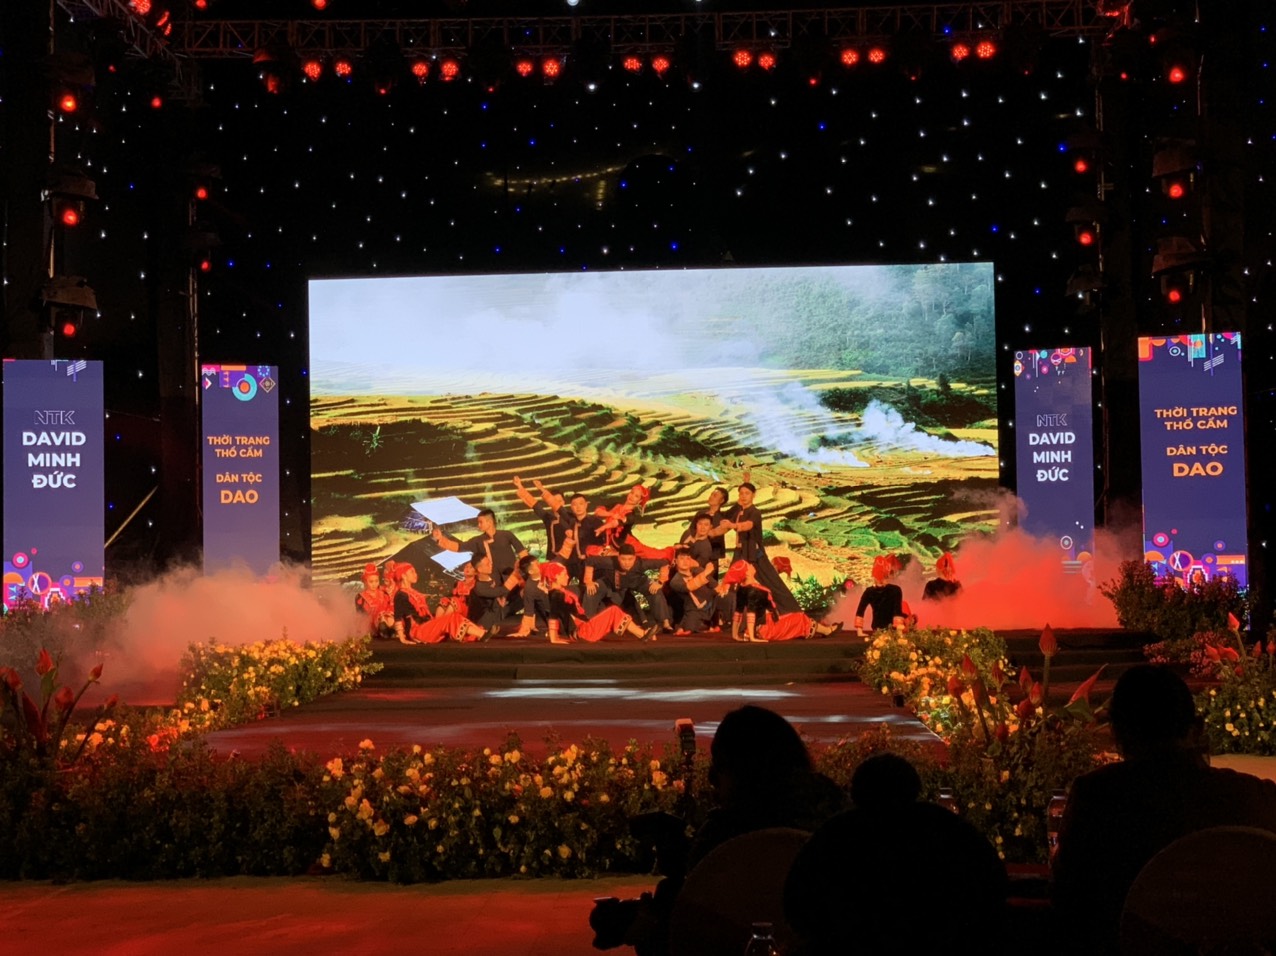 festival tinh hoa tay bac huong sac lao cai nam 2021 duoc du khach don nhan nong nhiet 8343 1